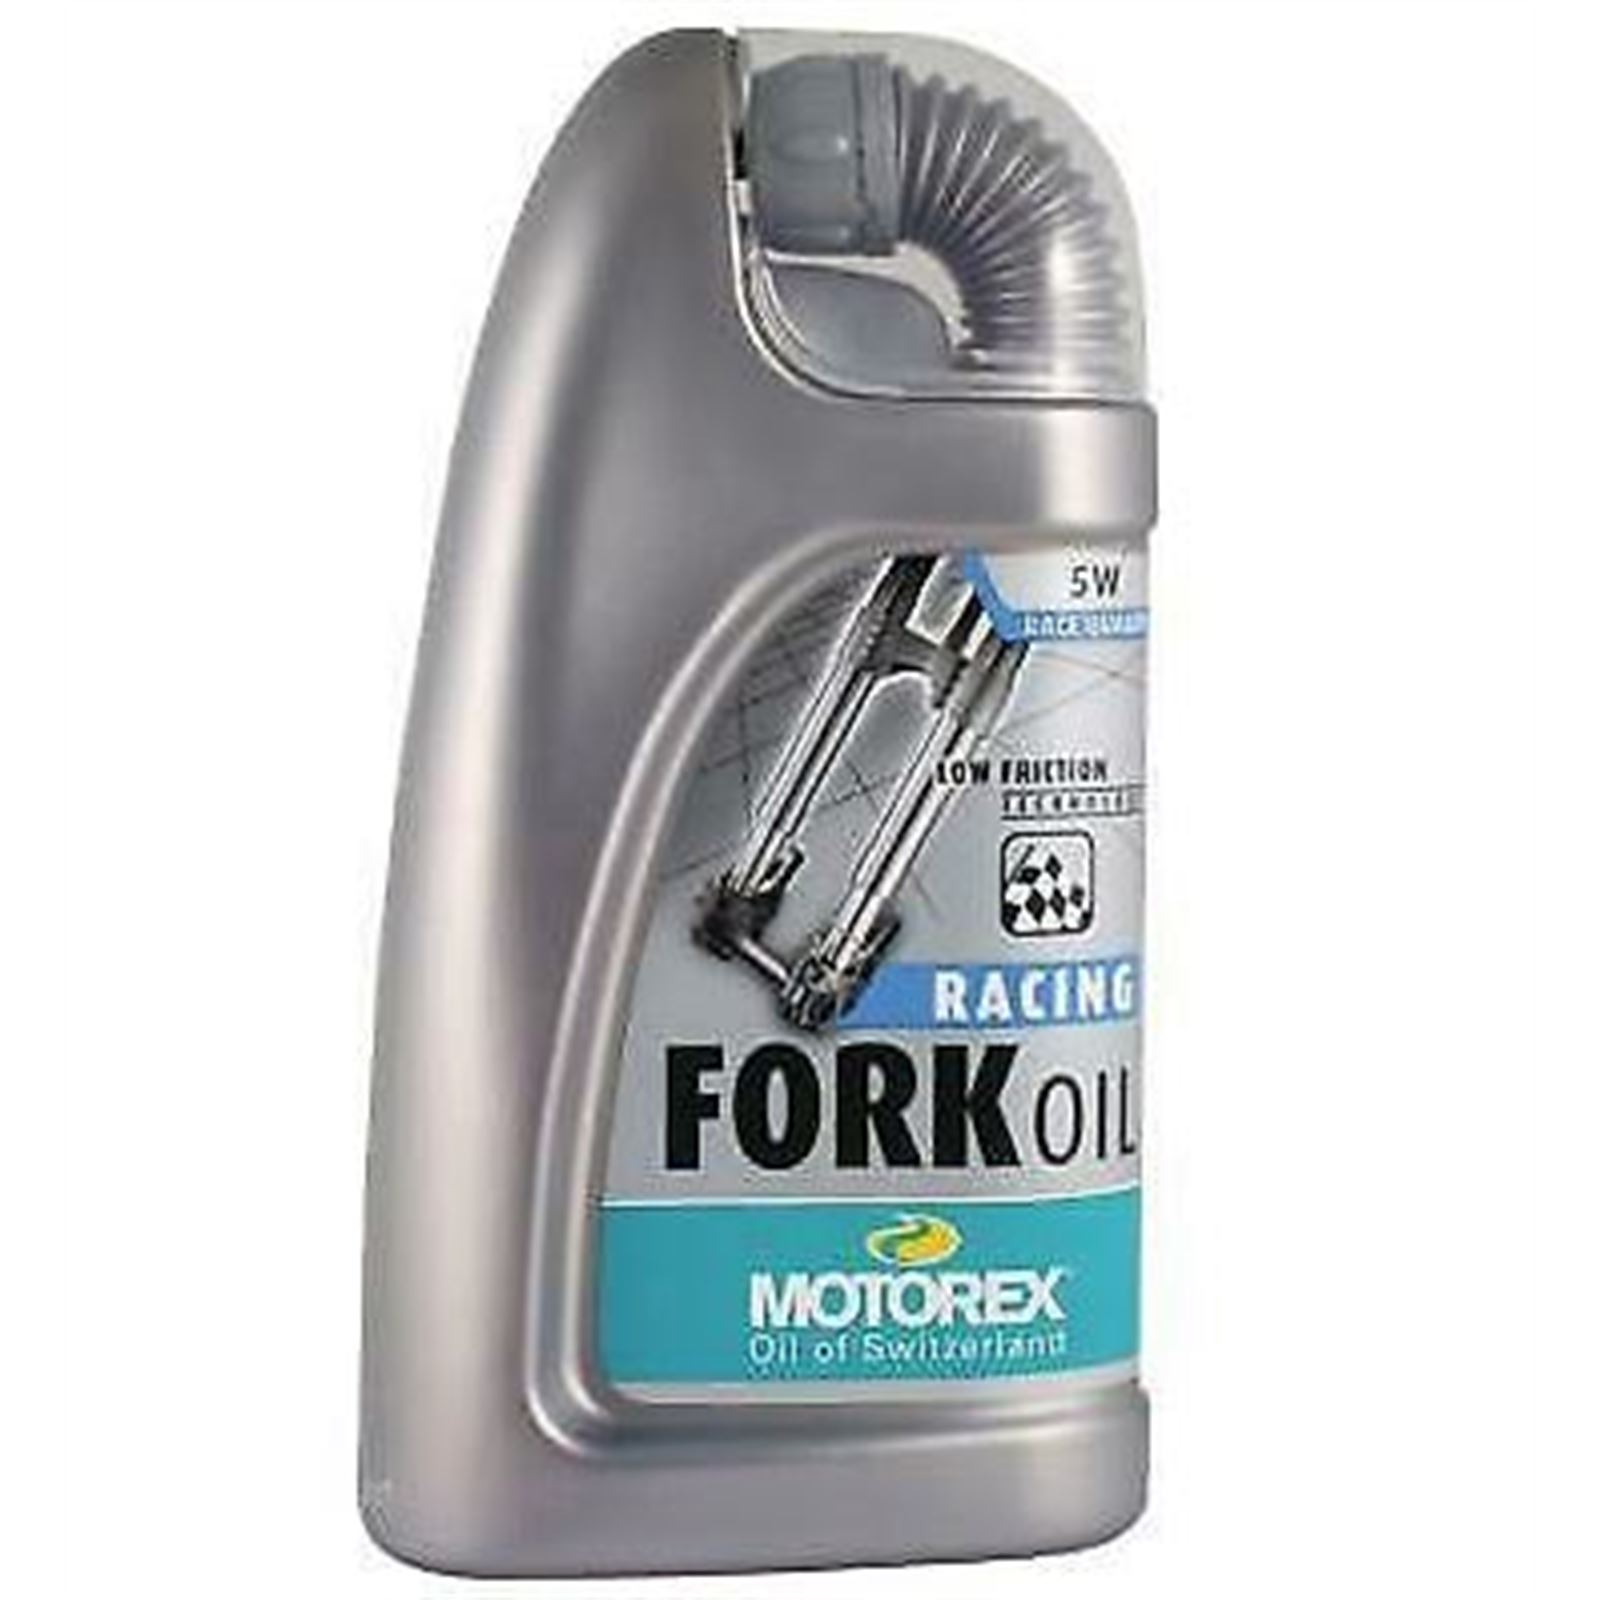 Motorex Low Friction Racing Fork Oil 5W 59 LT